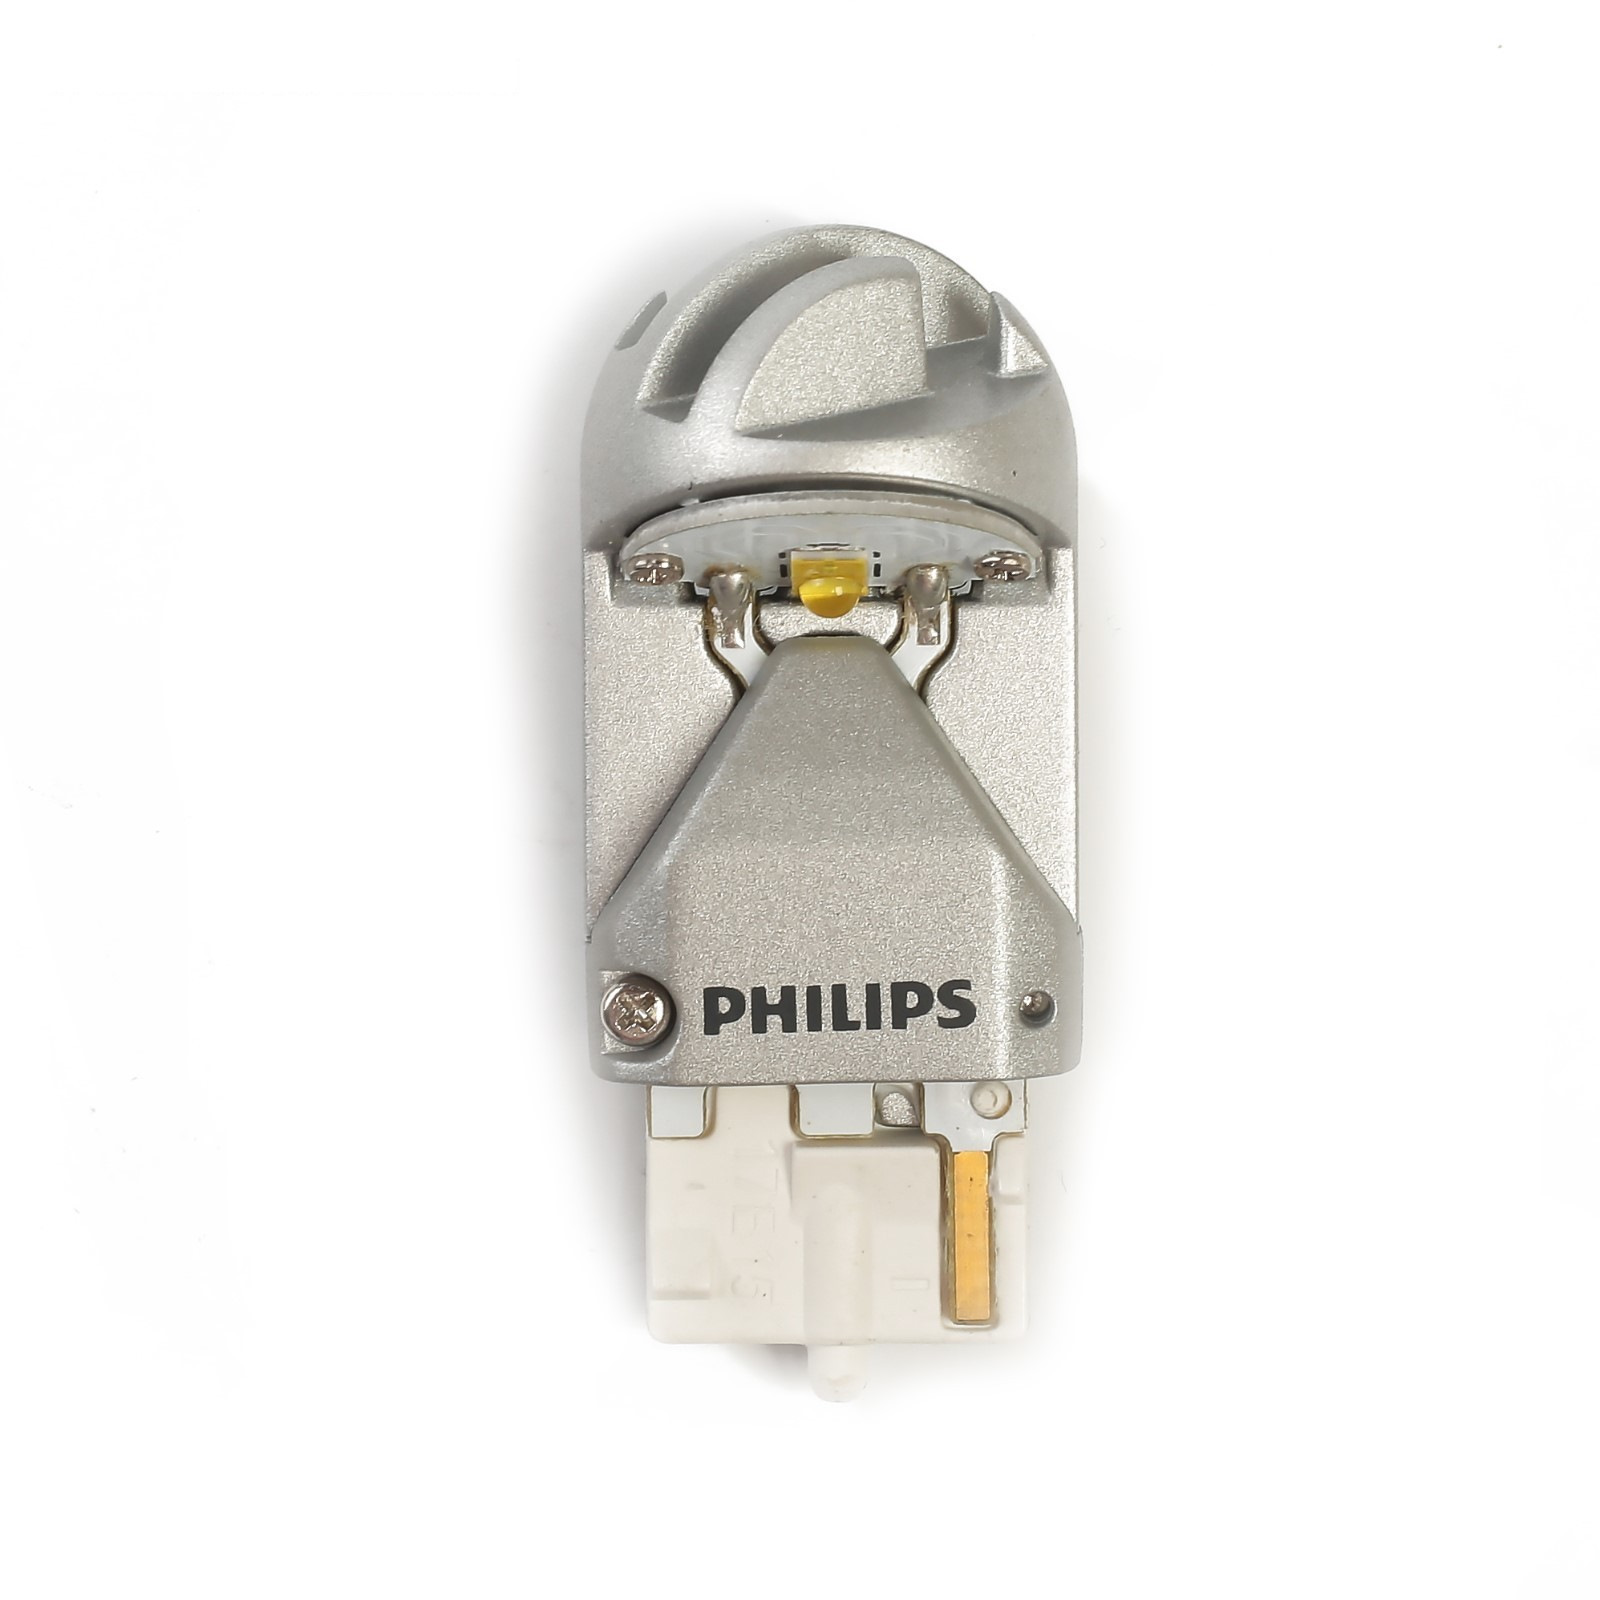 W 12v 5w. W21w led Philips. Philips w21w 12795x1. W16w лампа светодиодная Philips. W21/5v лампа светодиодная Philips.